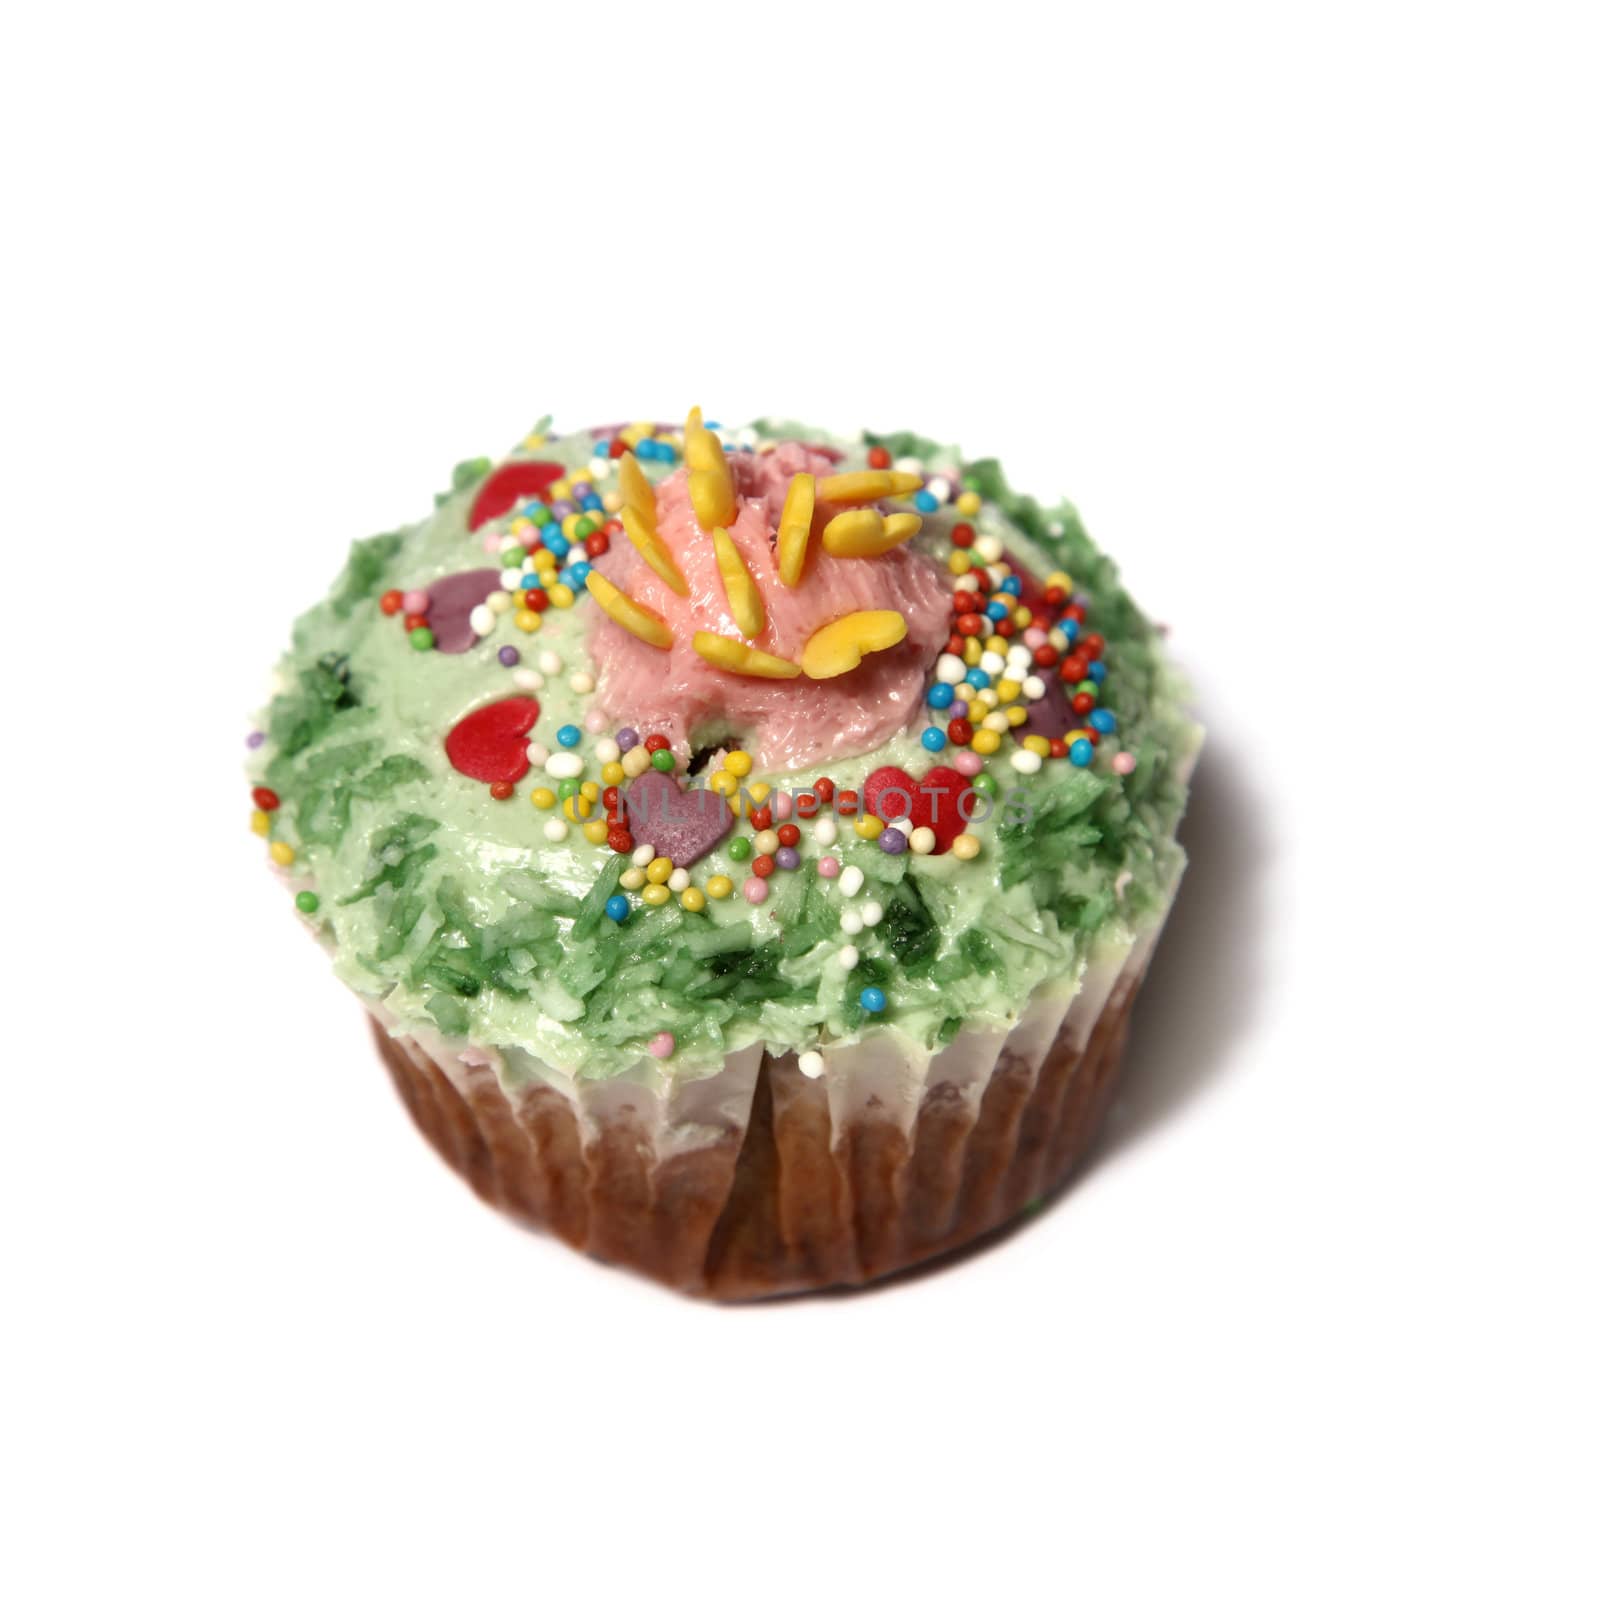 Cupcake - homemade  by Farina6000